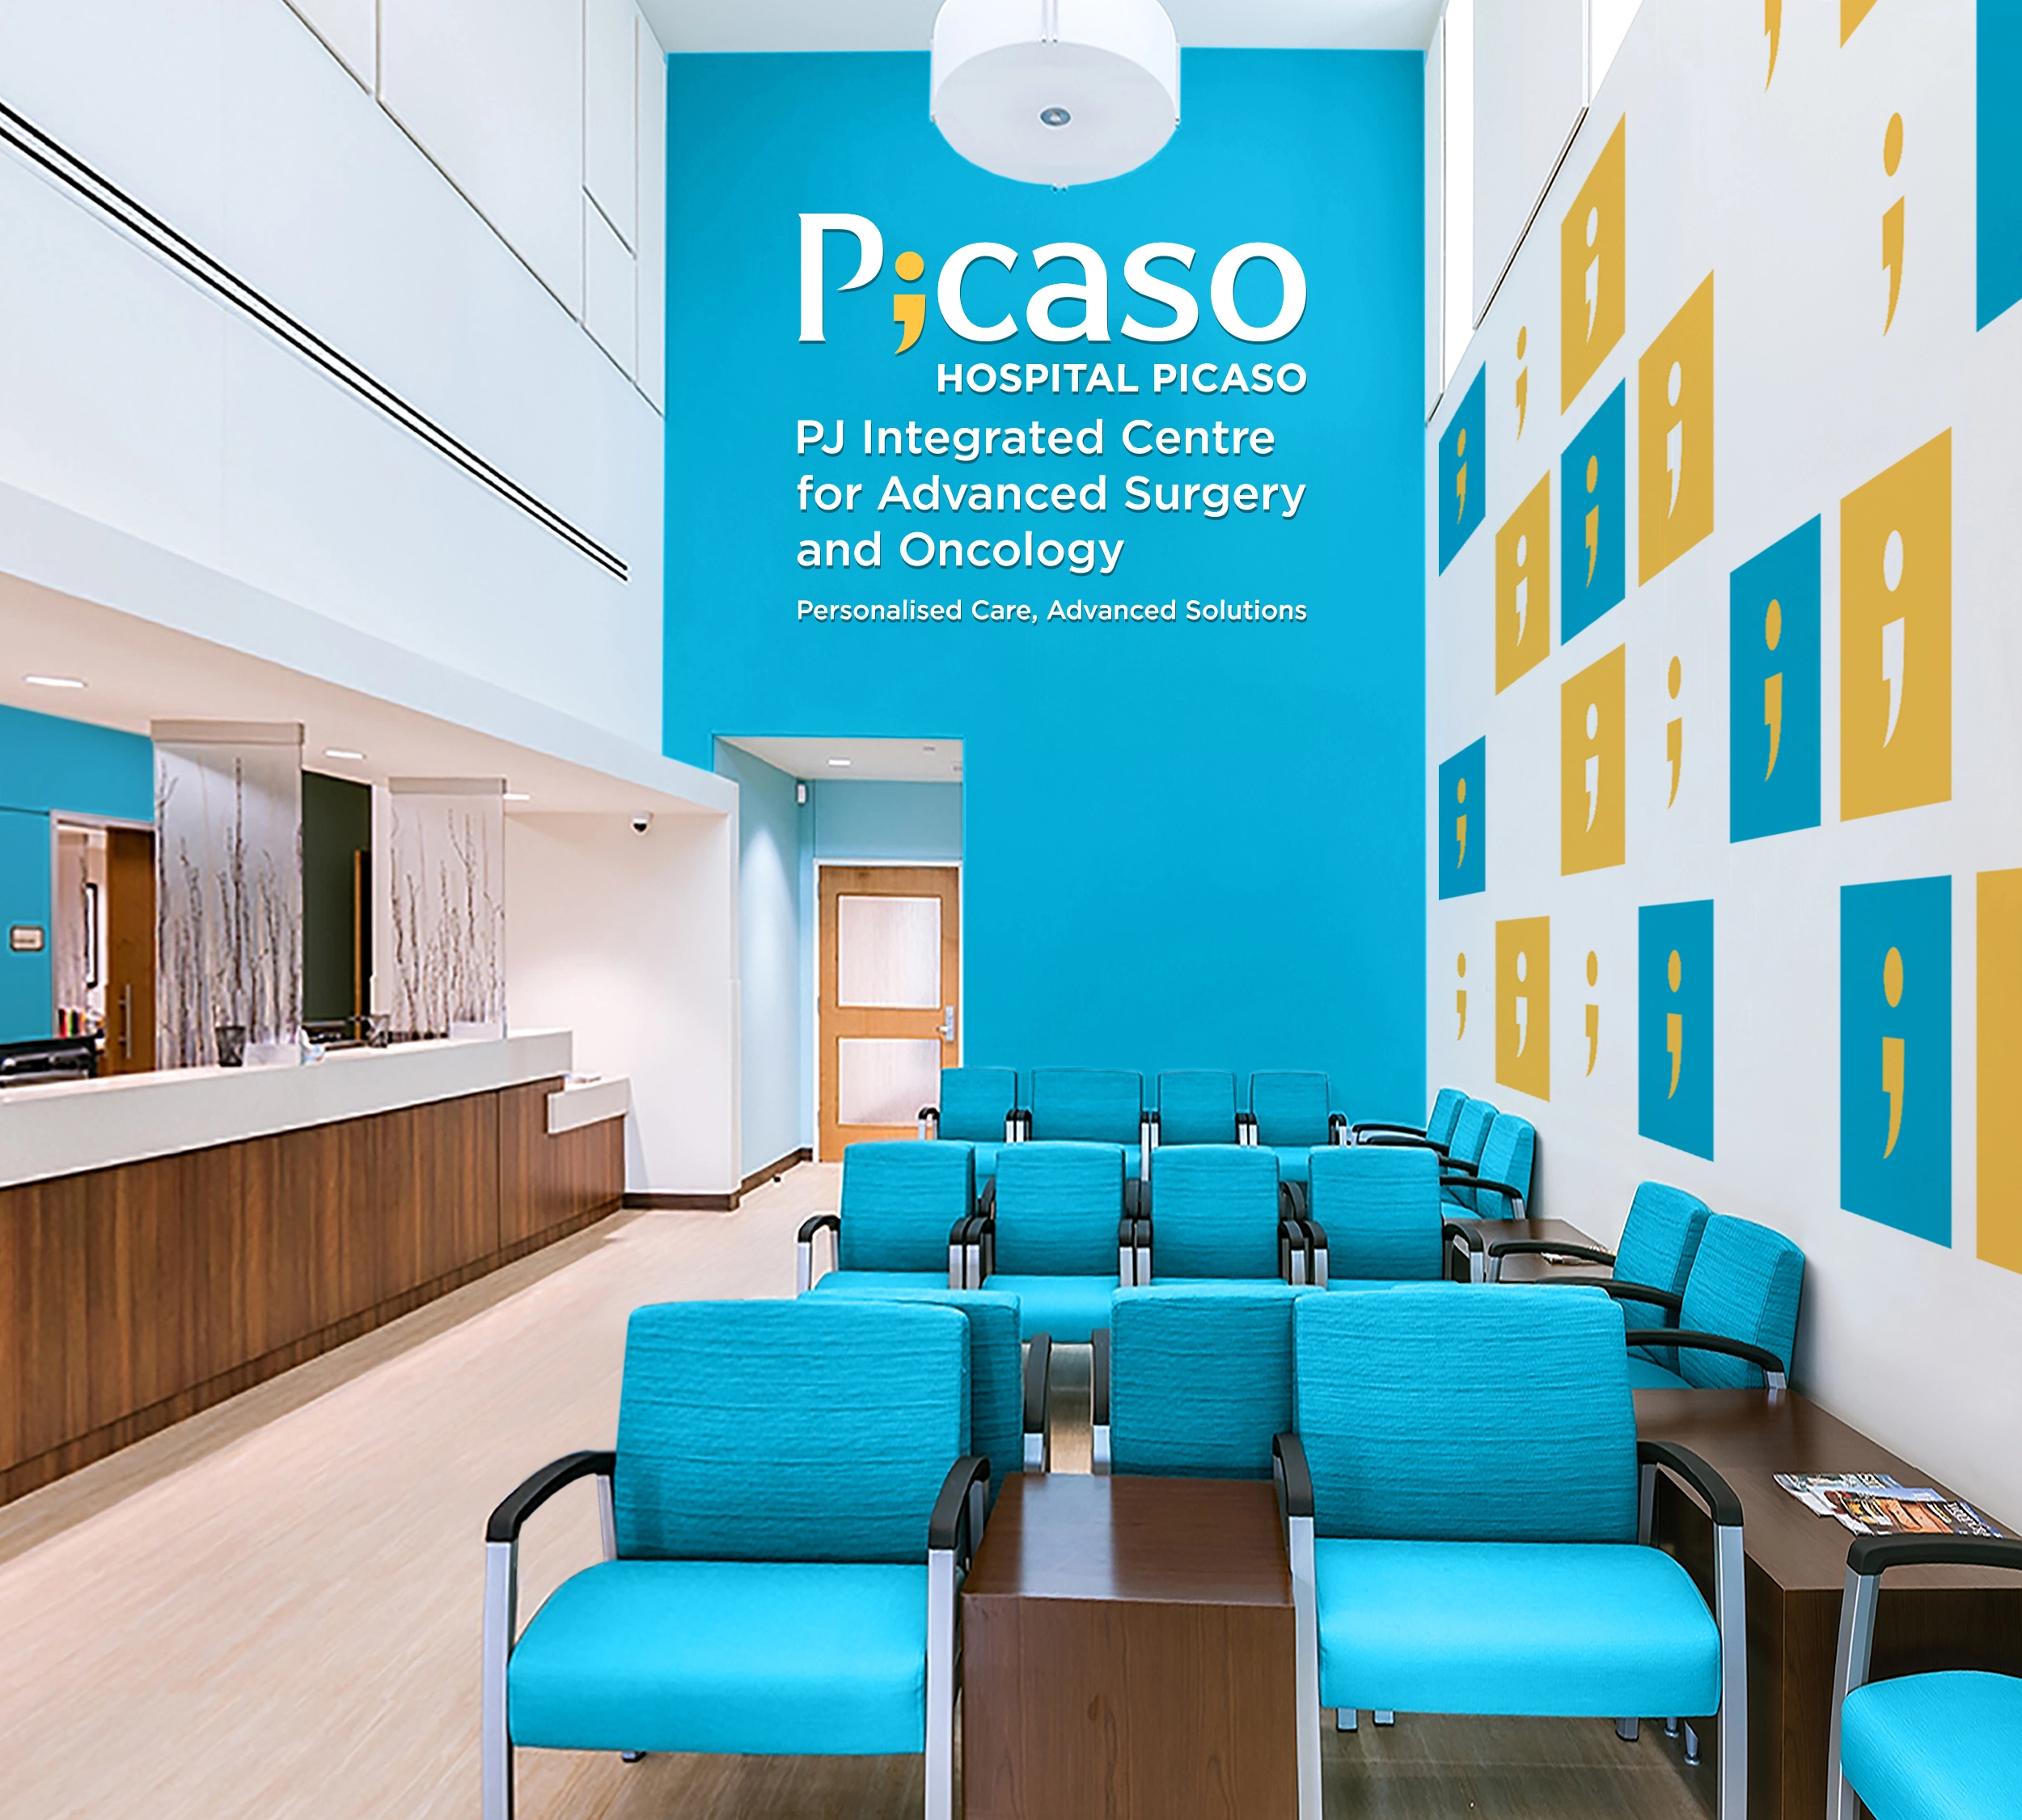 Picaso Hospital's Core Values